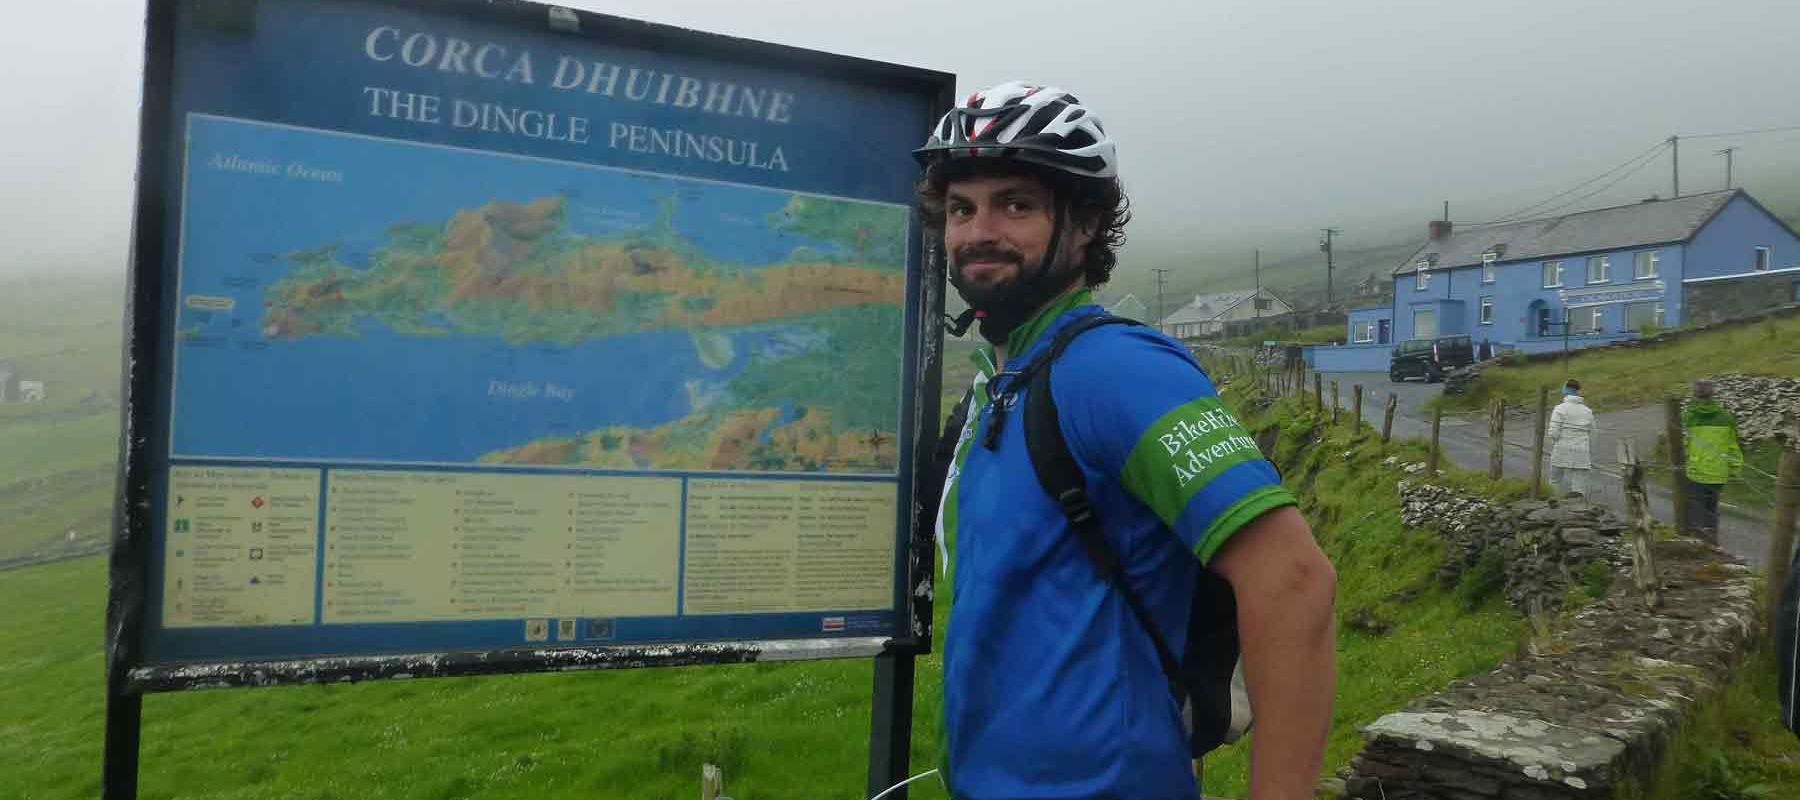 Dingle Peninsula Biking Tour Group